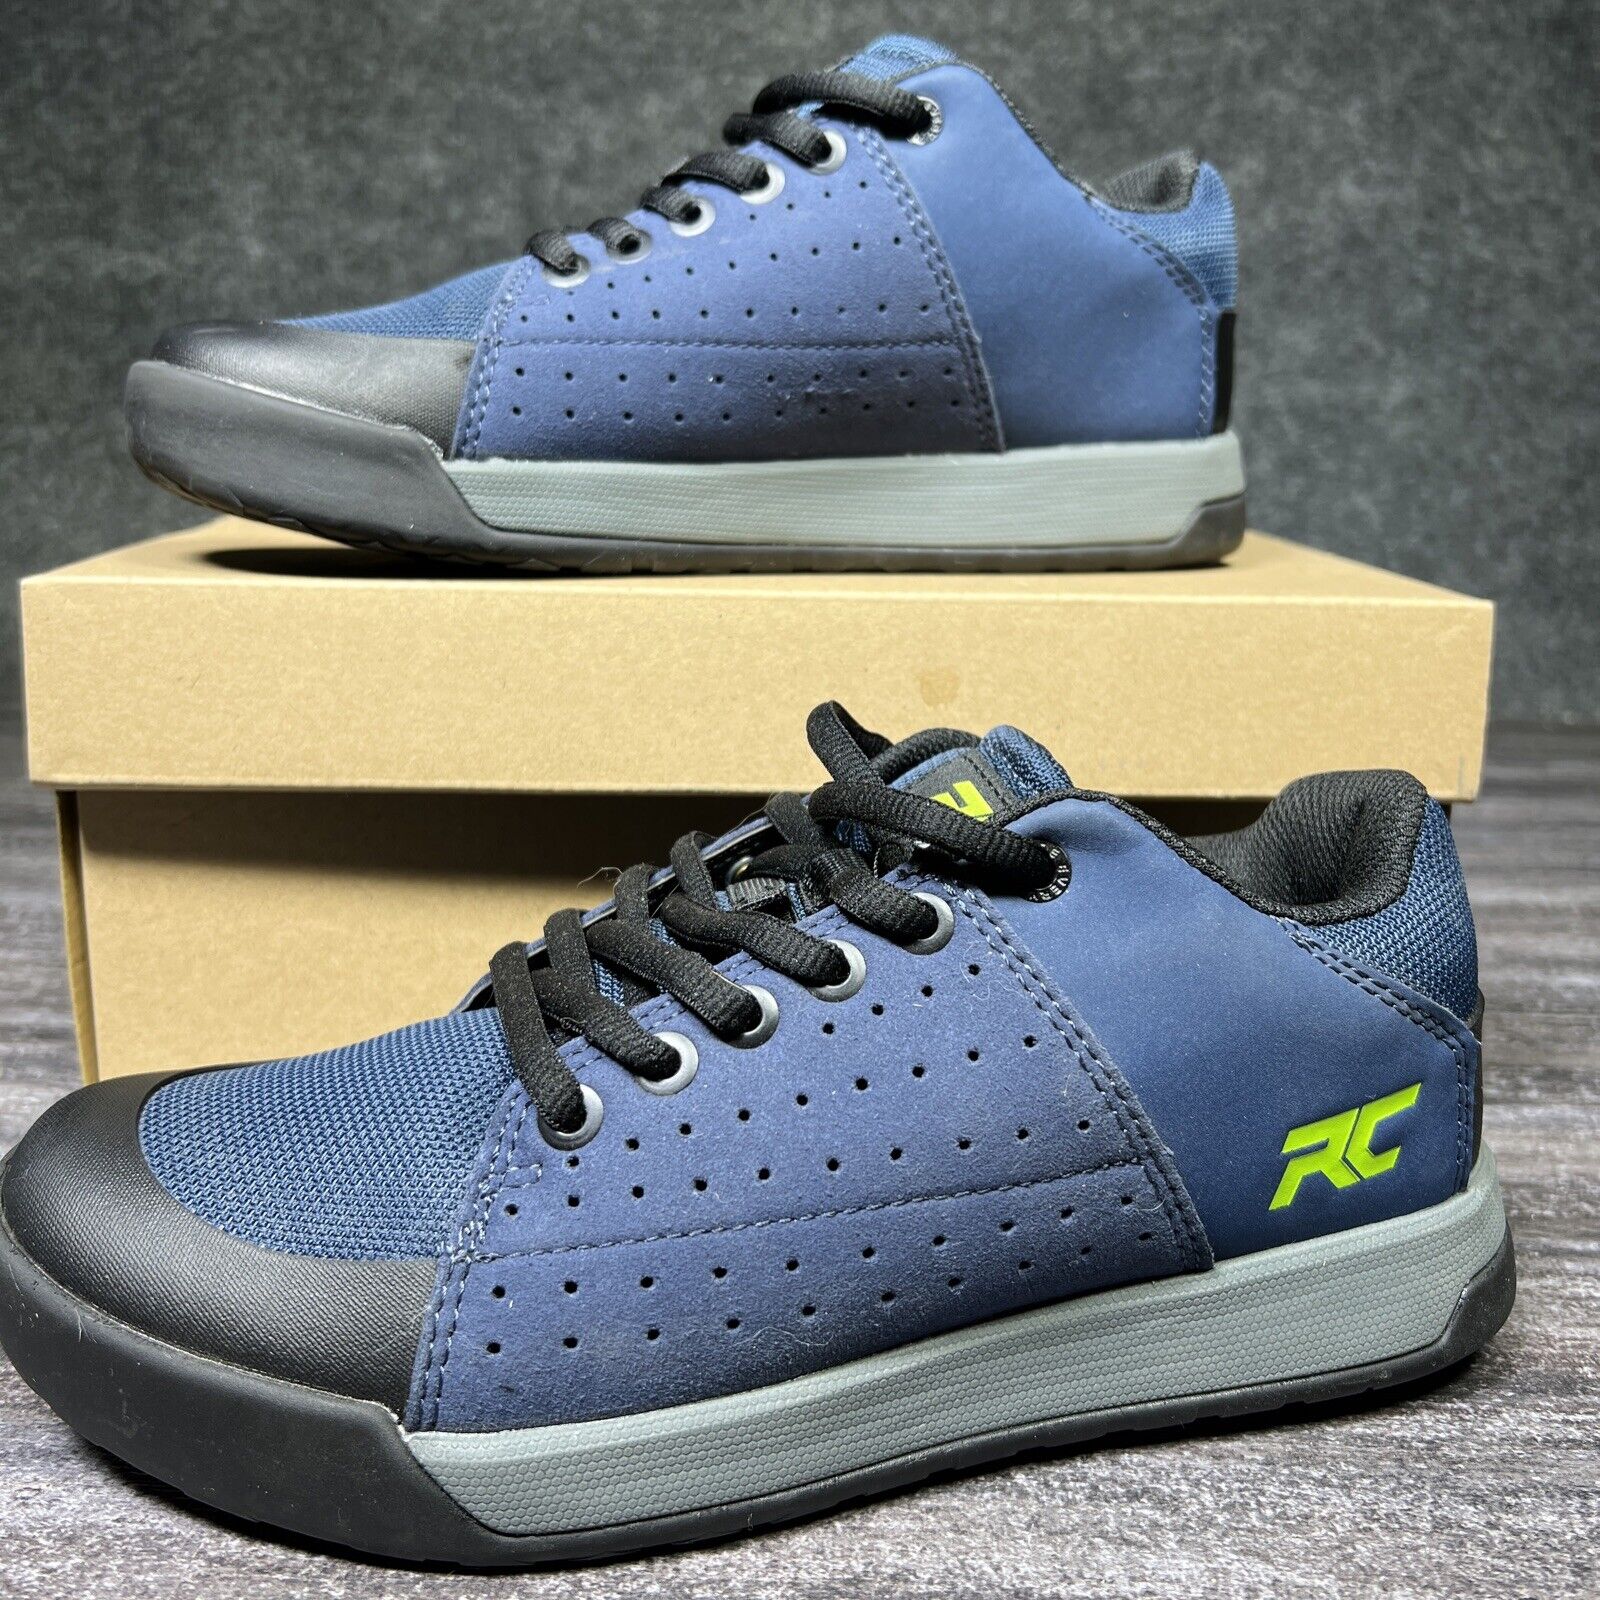 Ride Concepts (rc) Livewire Youth Mtb Shoes Size 6 Blue Lime Green Bmx Shoe